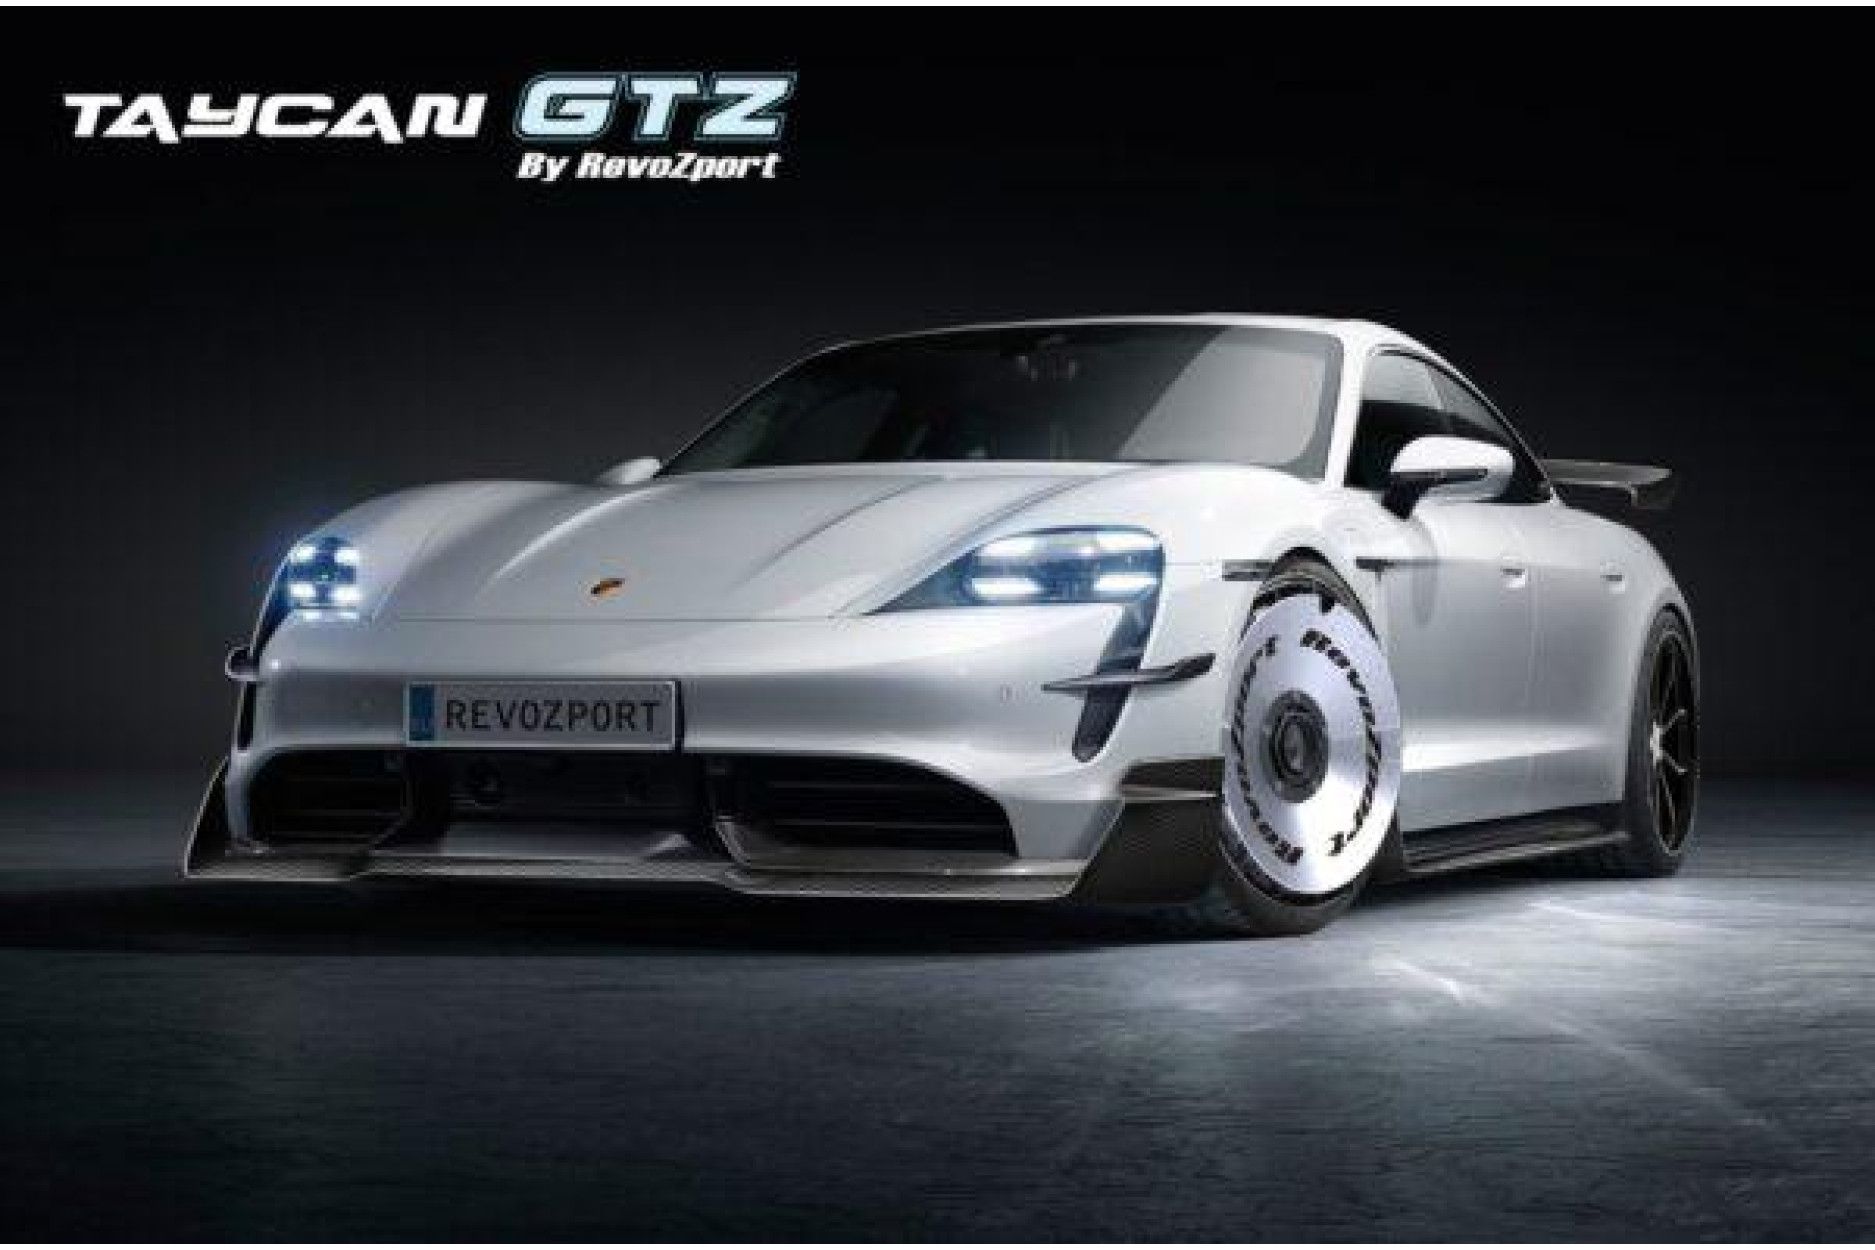 RevoZport Carbon Bodykit for Porsche Taycan 4S|Turbo|Turbo S "GT-Z"